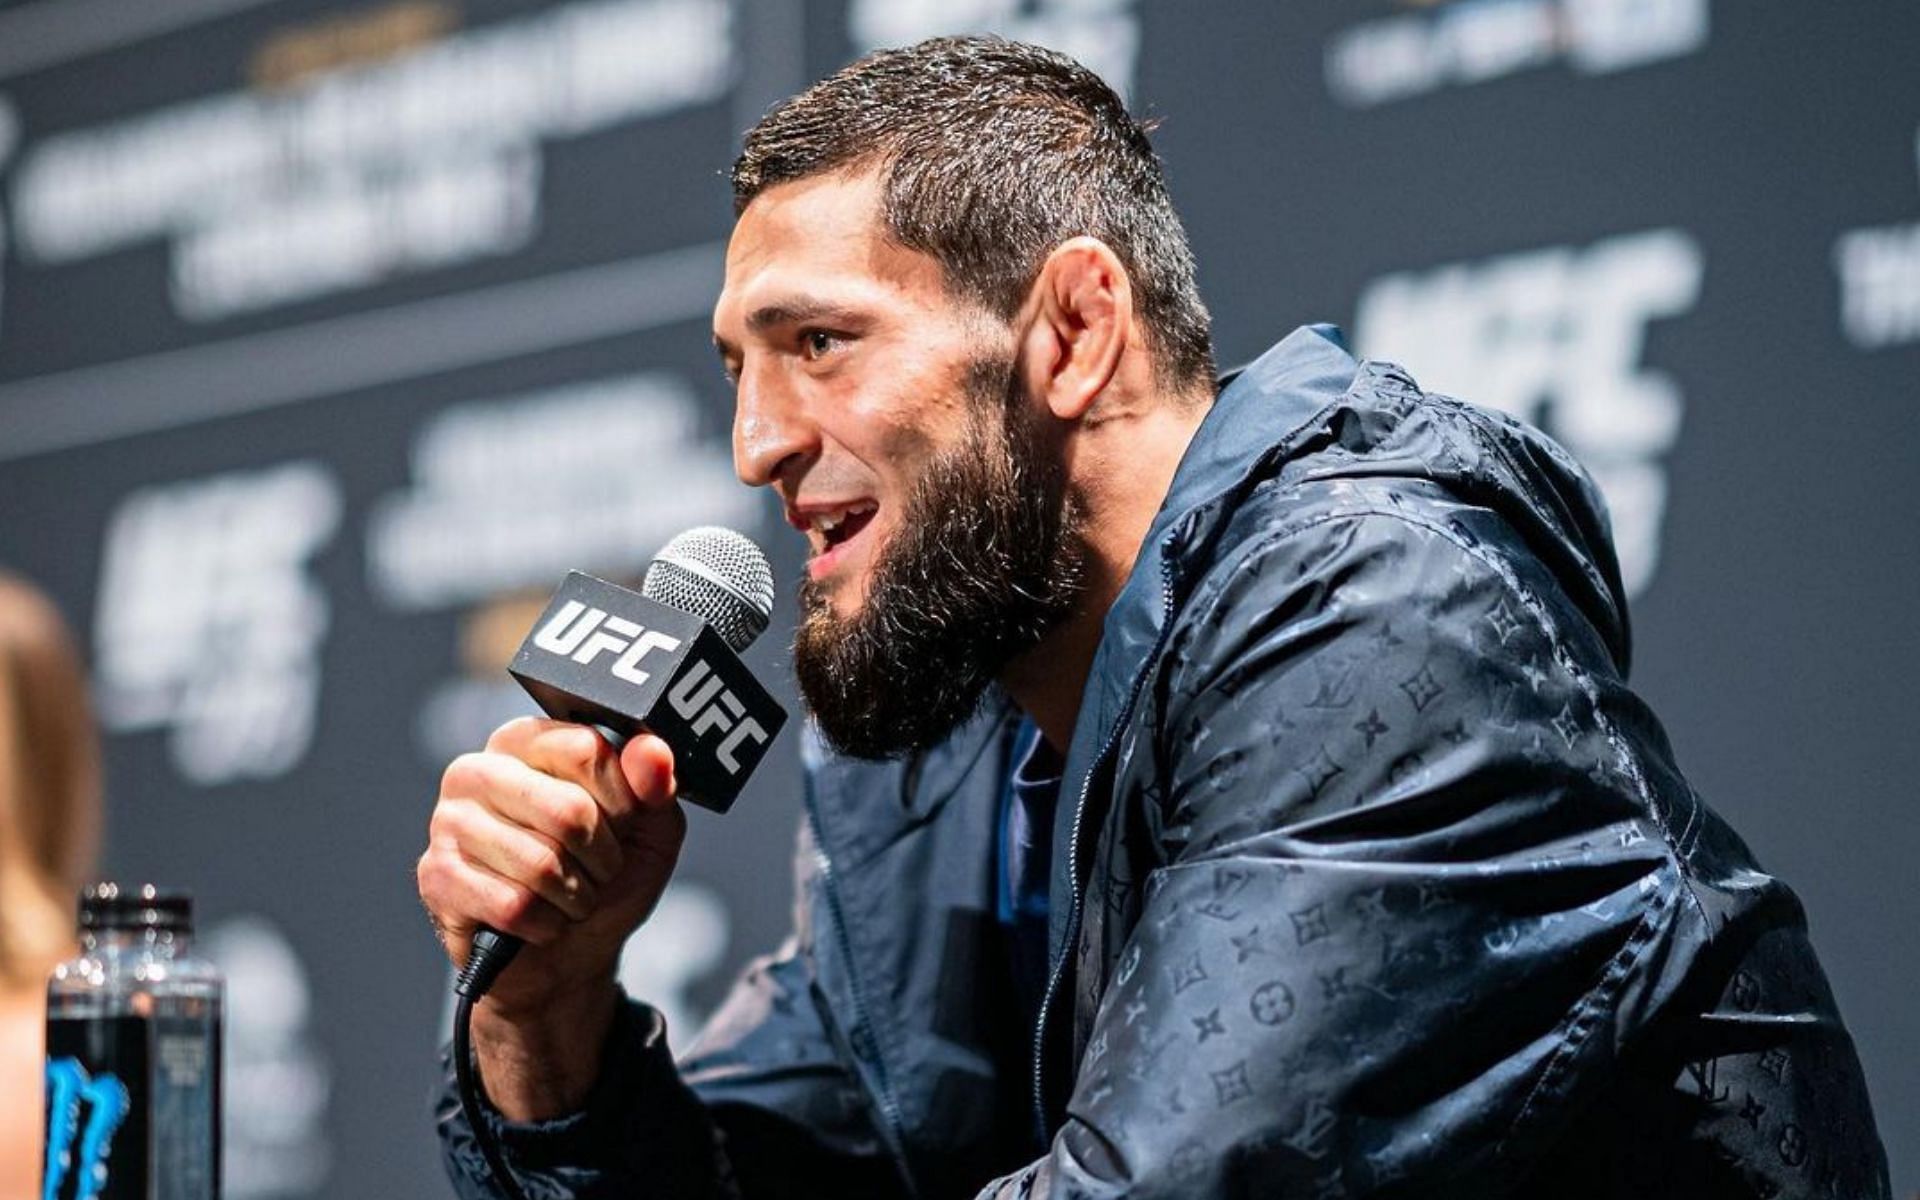 Khamzat Chimaev at UFC 273 Pre-Fight press conference [Image Courtesy: @khamzat_chimaev on Instagram]